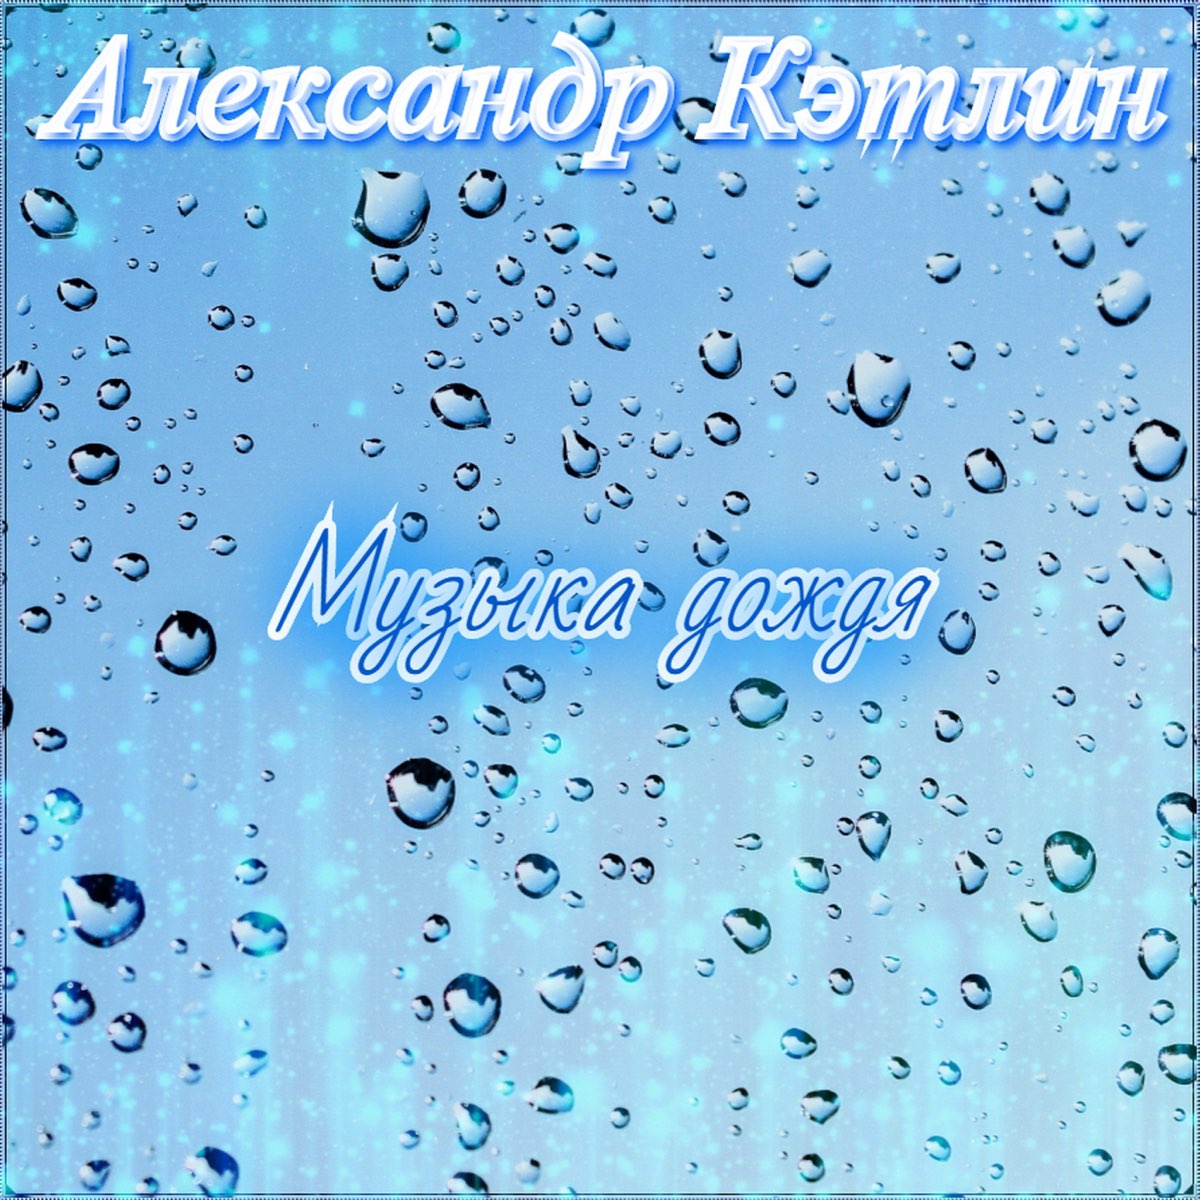 Александров дождик